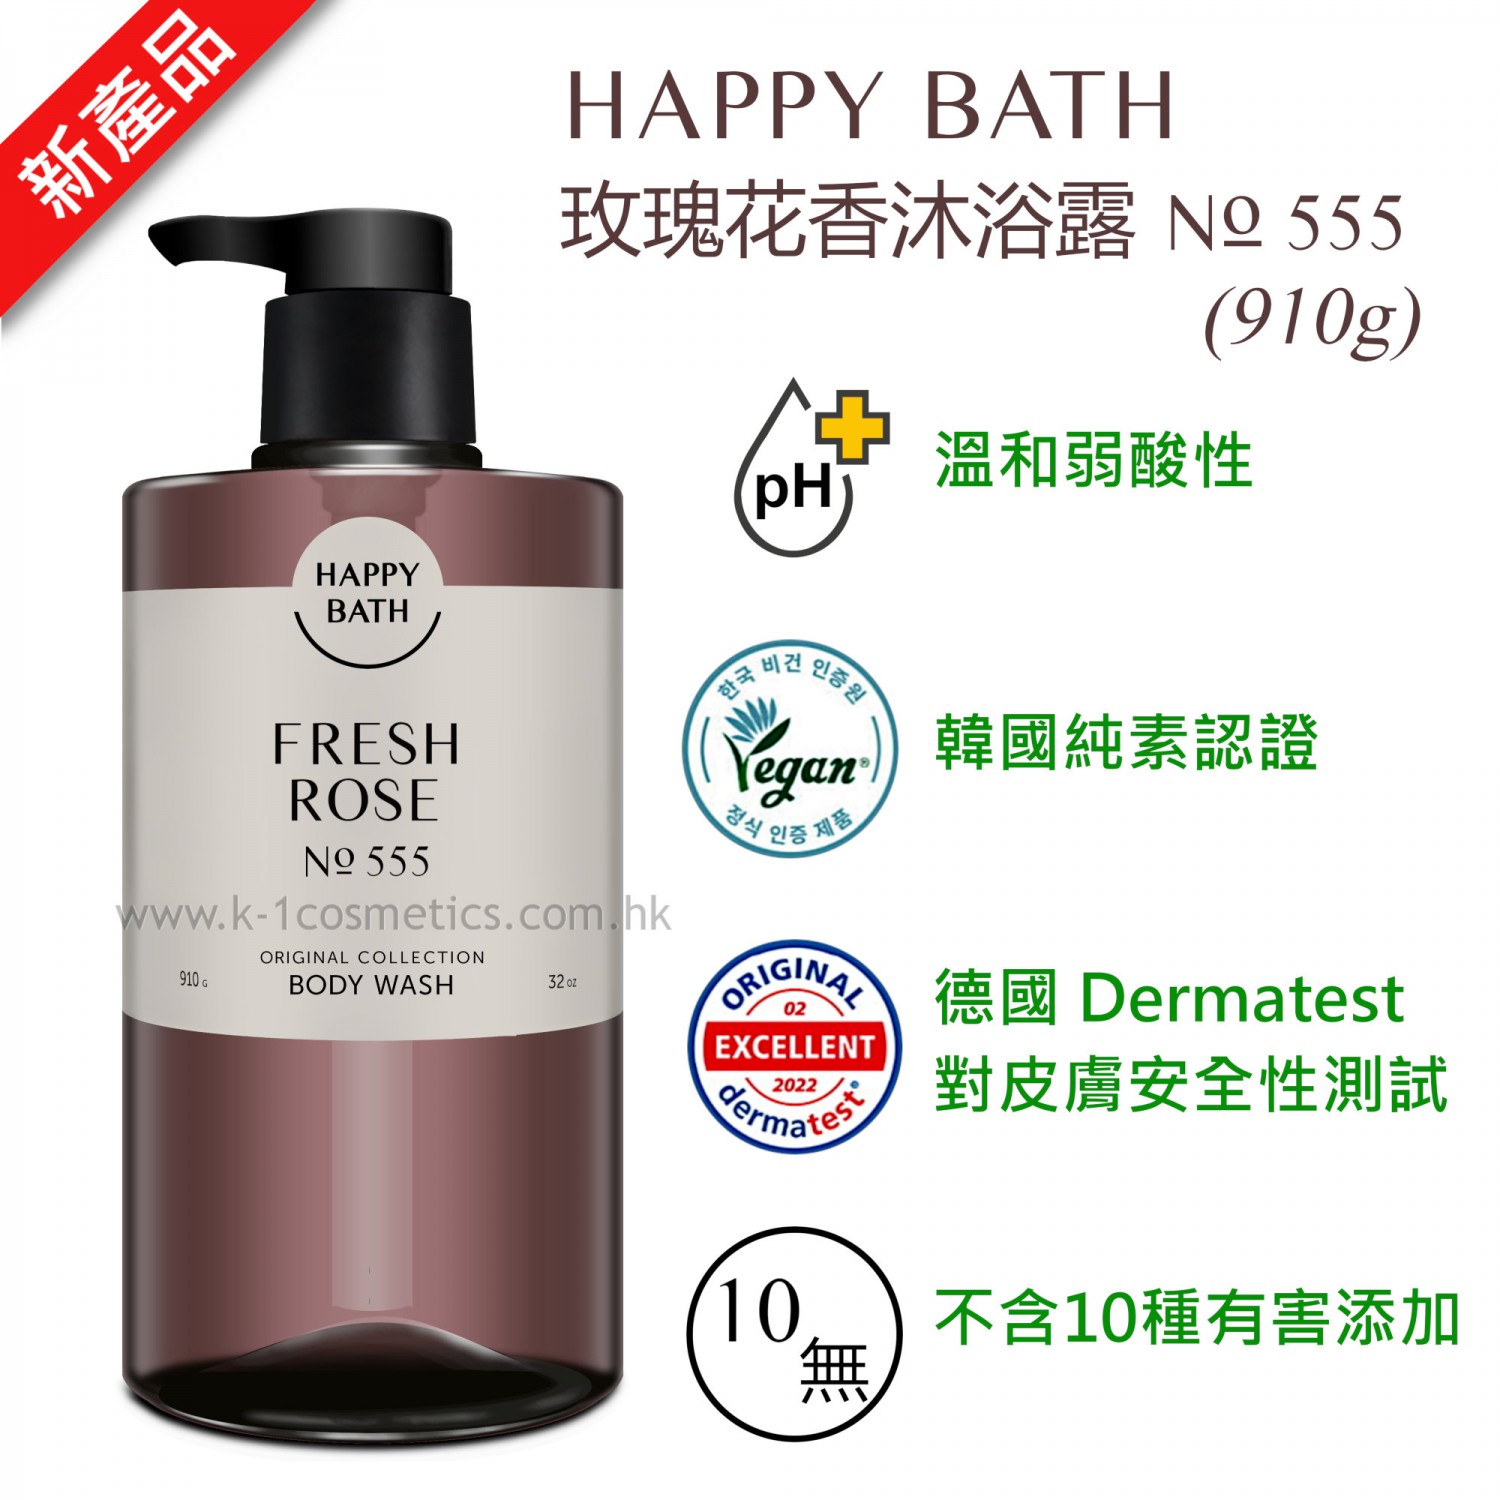 Happy Bath 玫瑰花香沐浴露 No. 555 (910g)